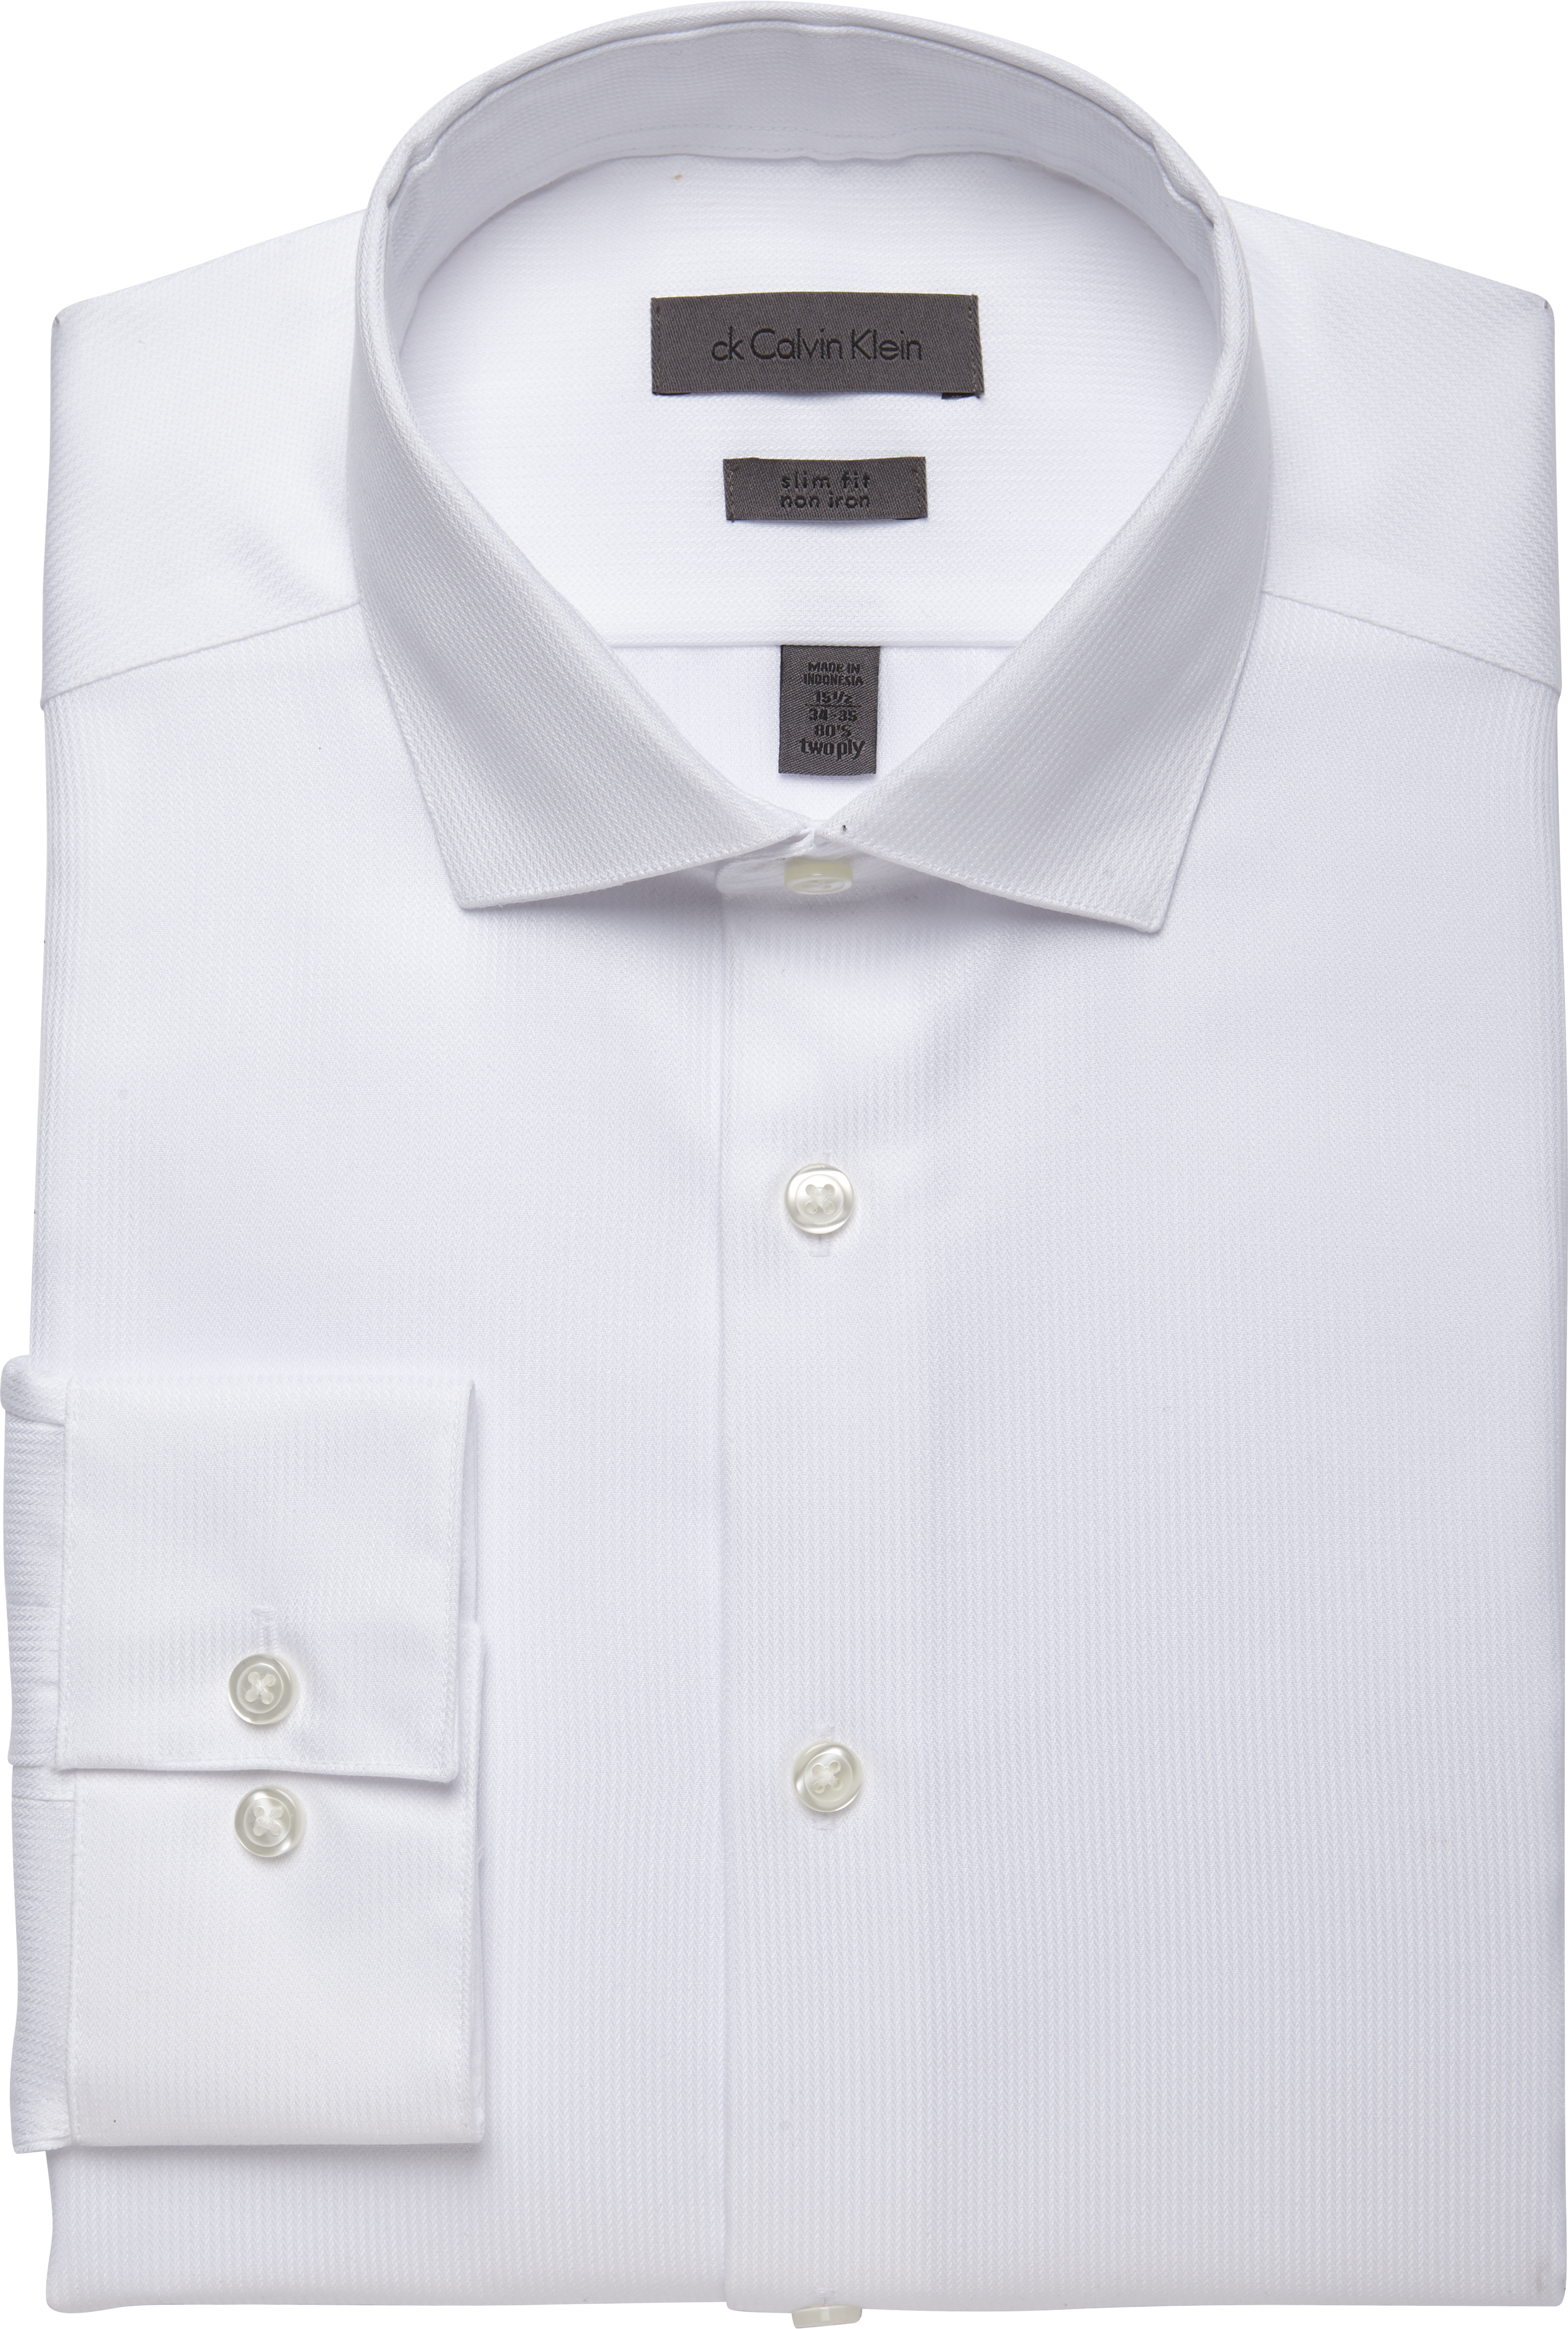 Koning Lear zanger erts Calvin Klein White Slim Fit Dress Shirt - Men's Sale | Men's Wearhouse